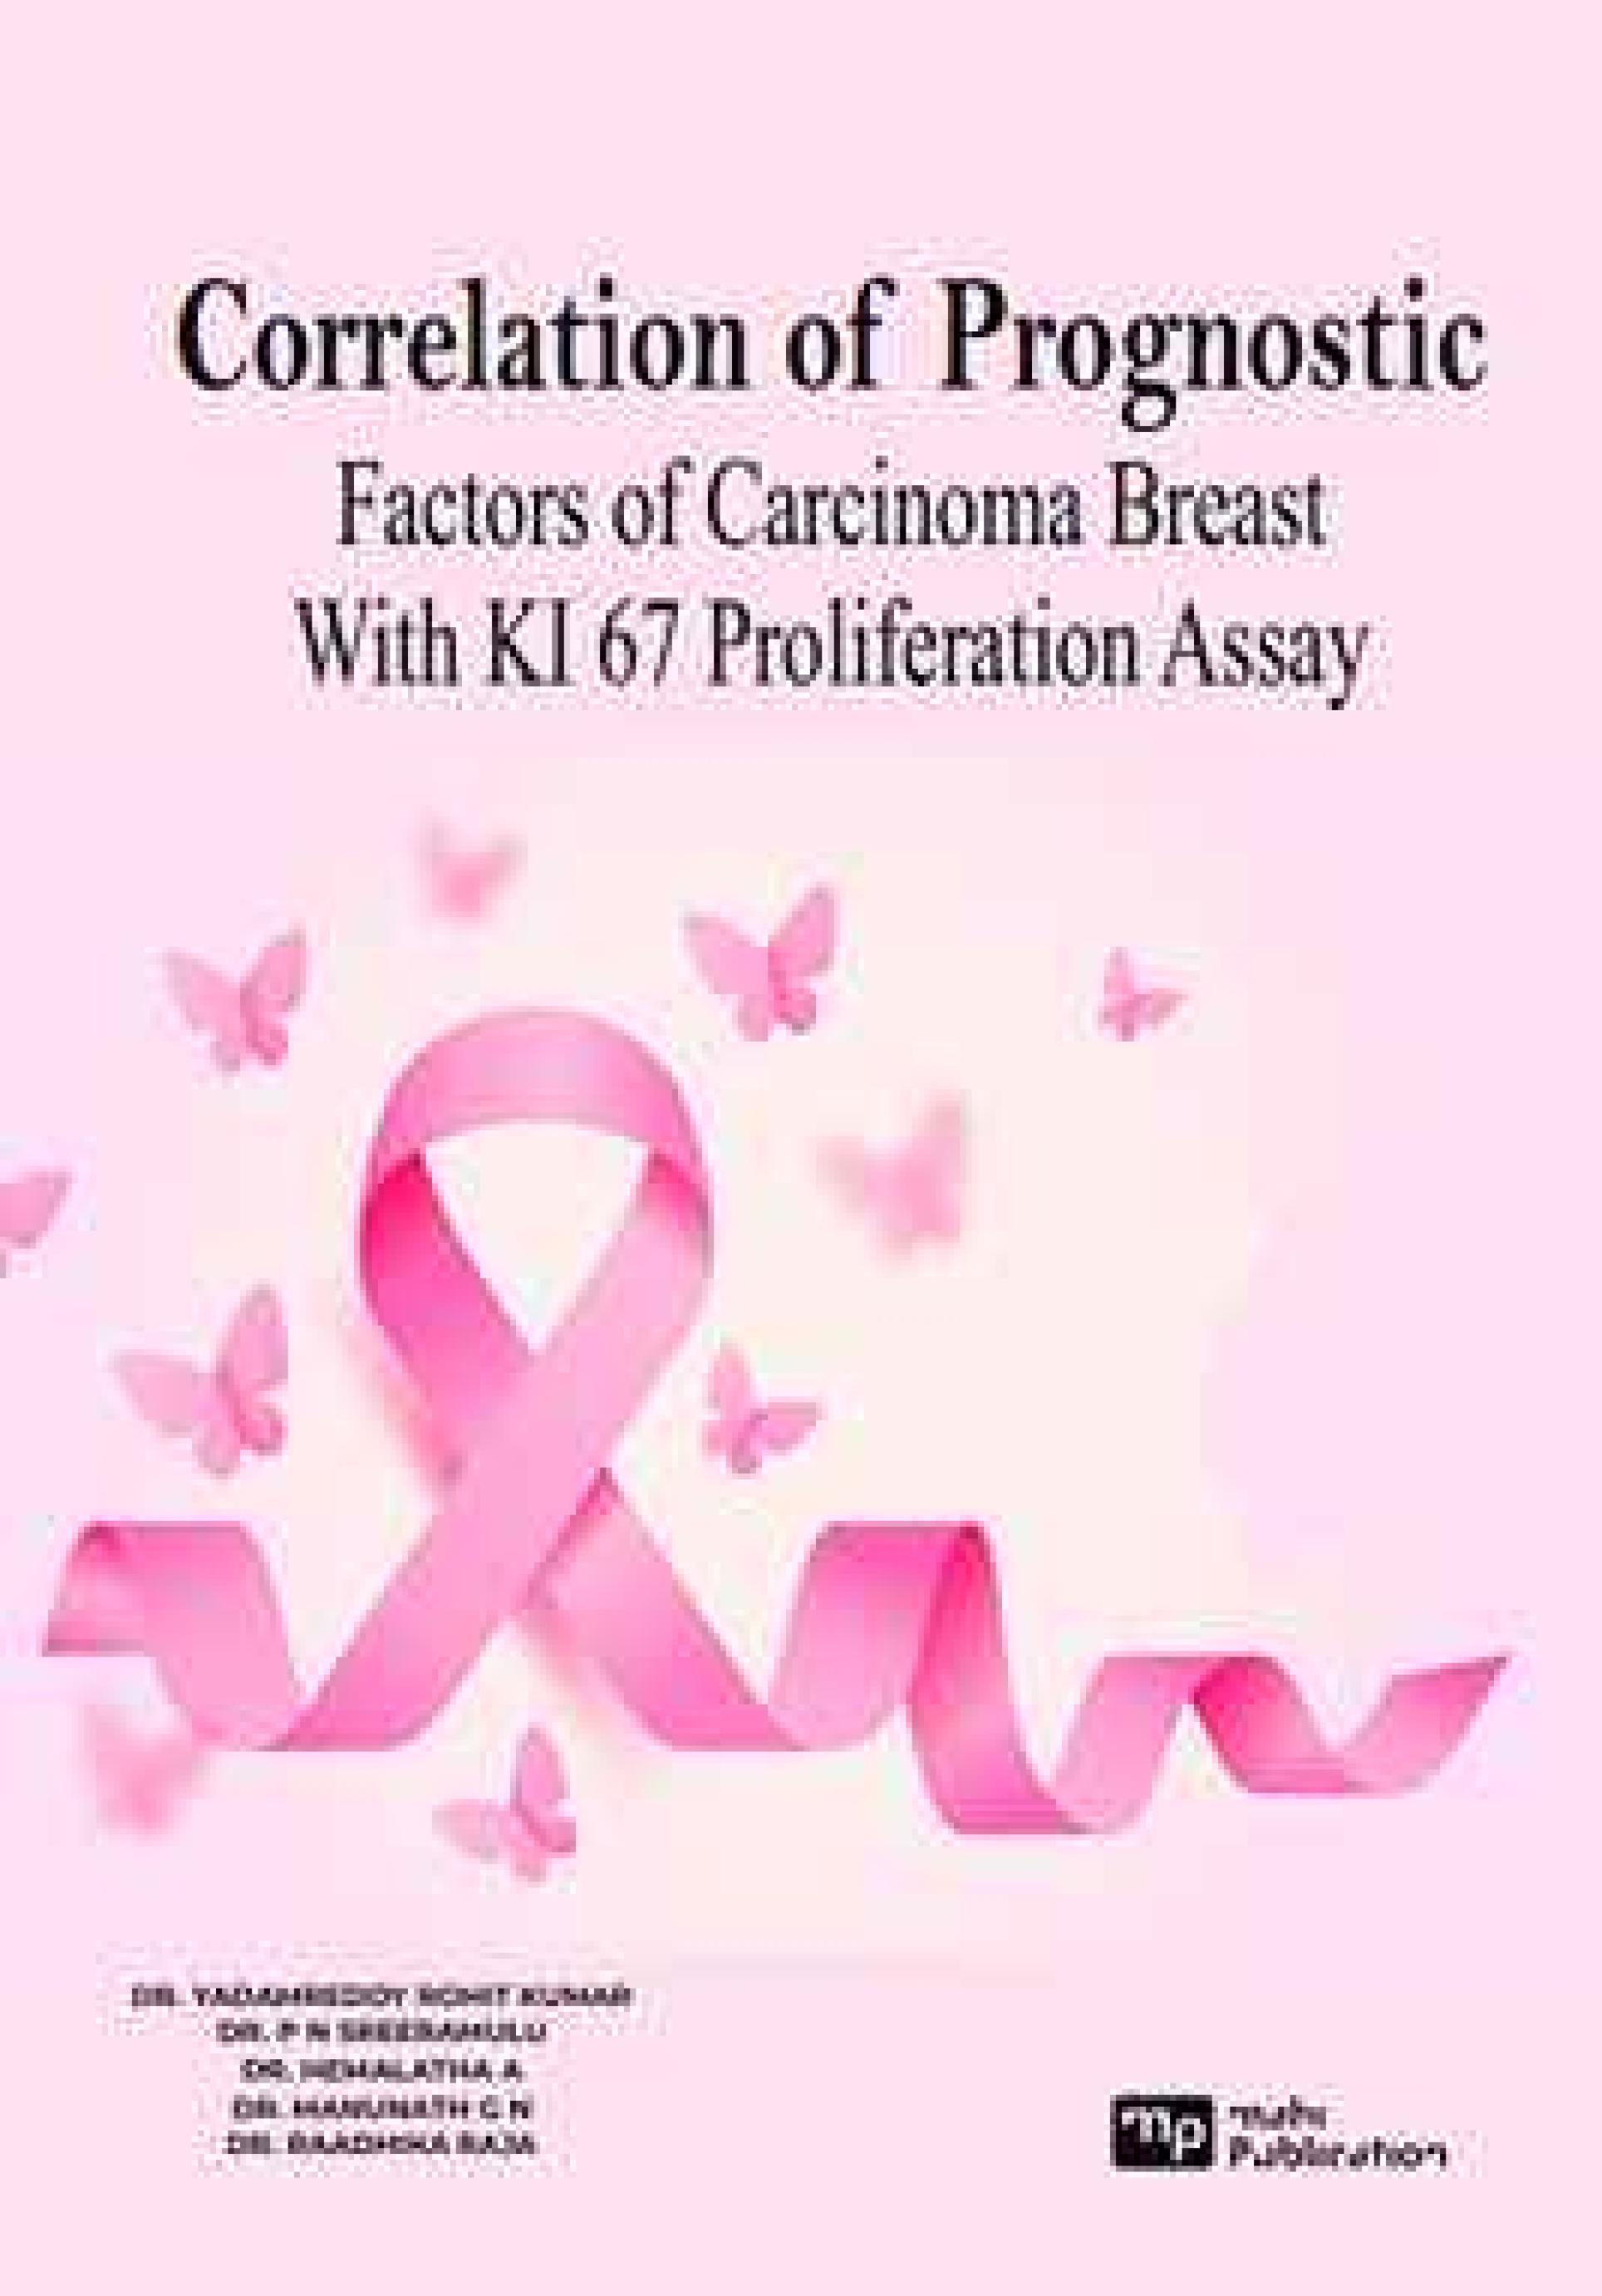 CORRELATION OF PROGNOSTIC FACTORS OF CARCINOMA BREAST WITH Ki 67 PROLIFERATION ASSAY